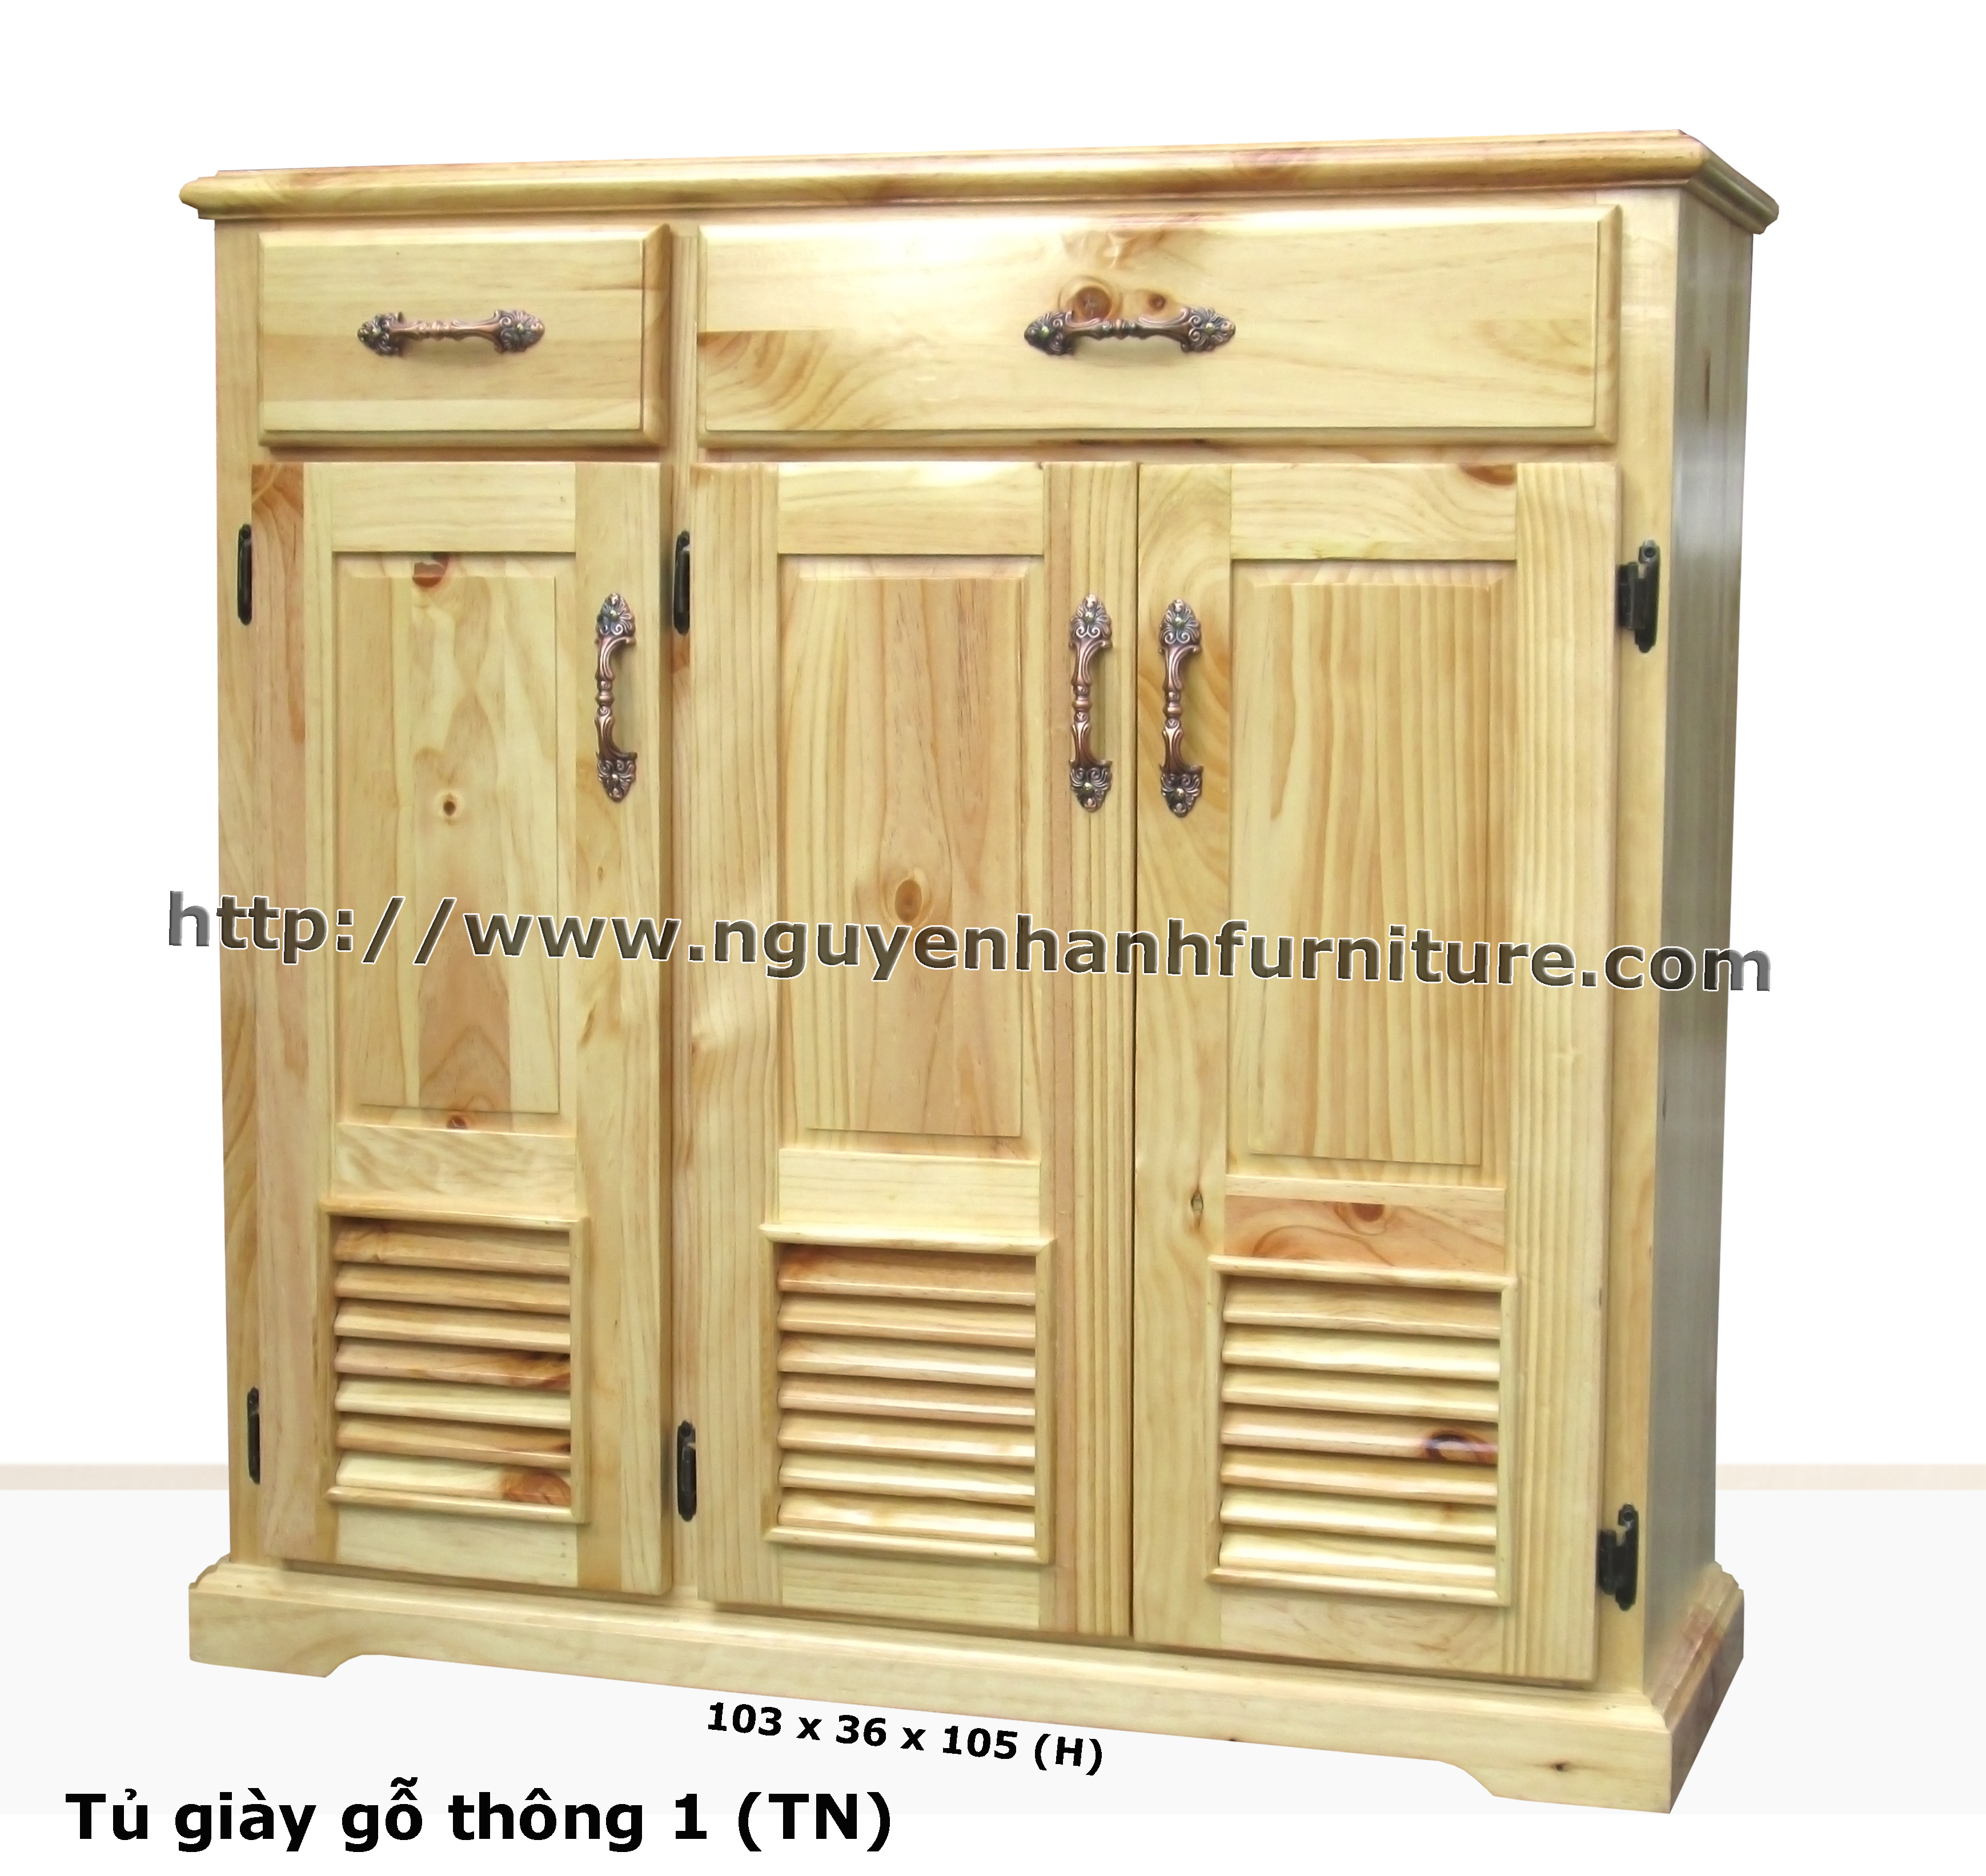 Name product: Pine wood Shoe cabinet 1m (Natural) - Dimensions: 103 x 36 x 105 (H) - Description: Natural pine wood